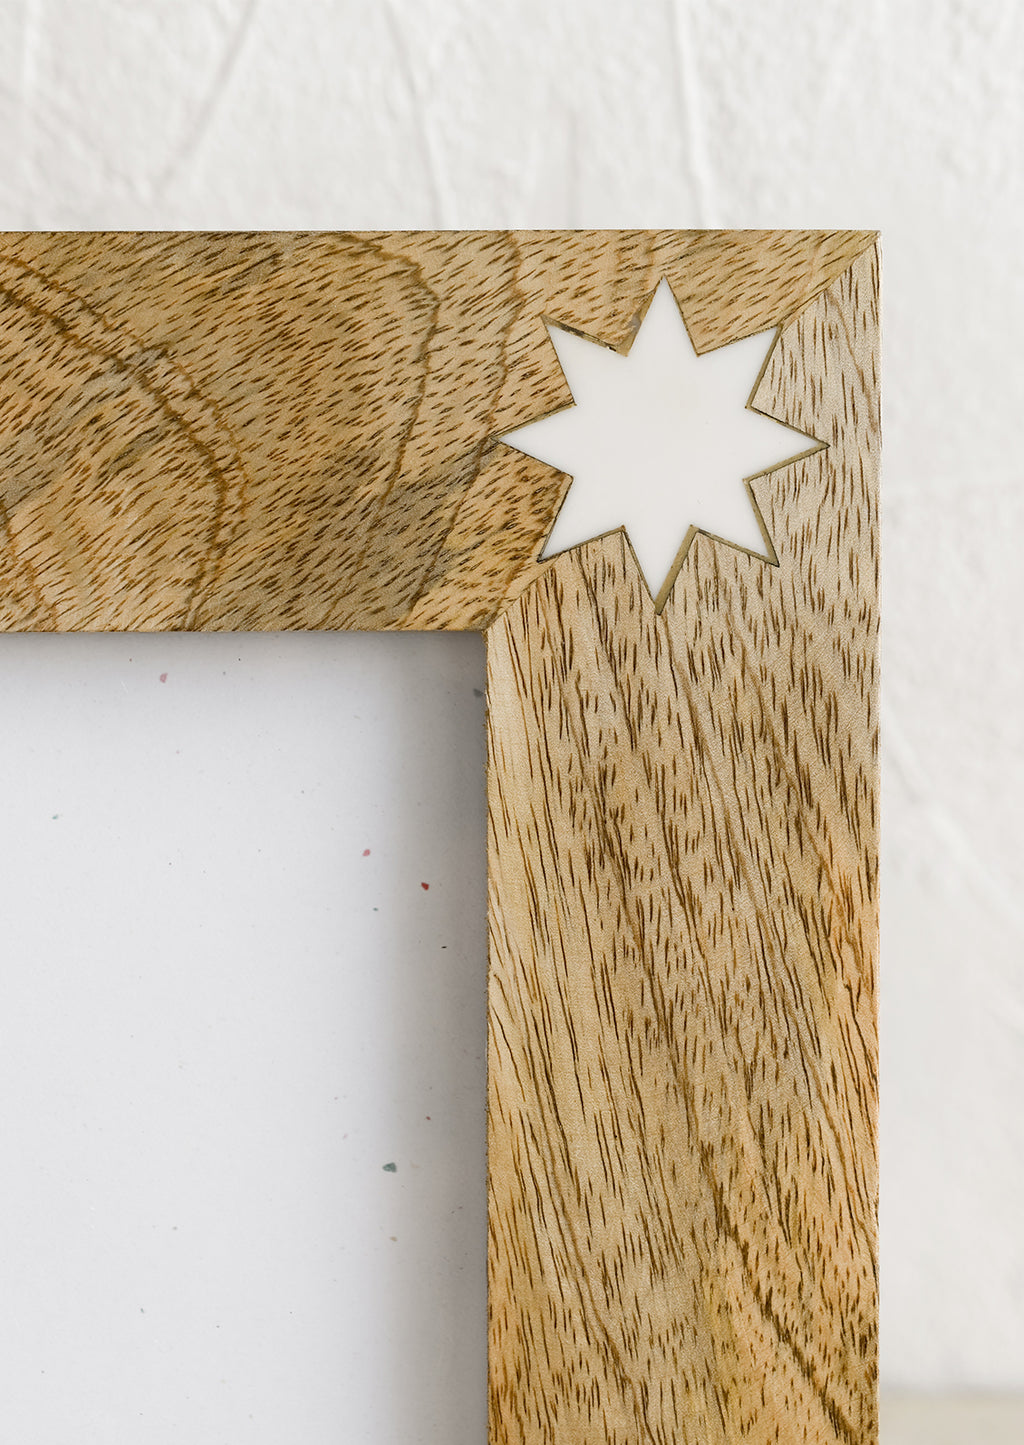 2: White resin star detailing on wood.